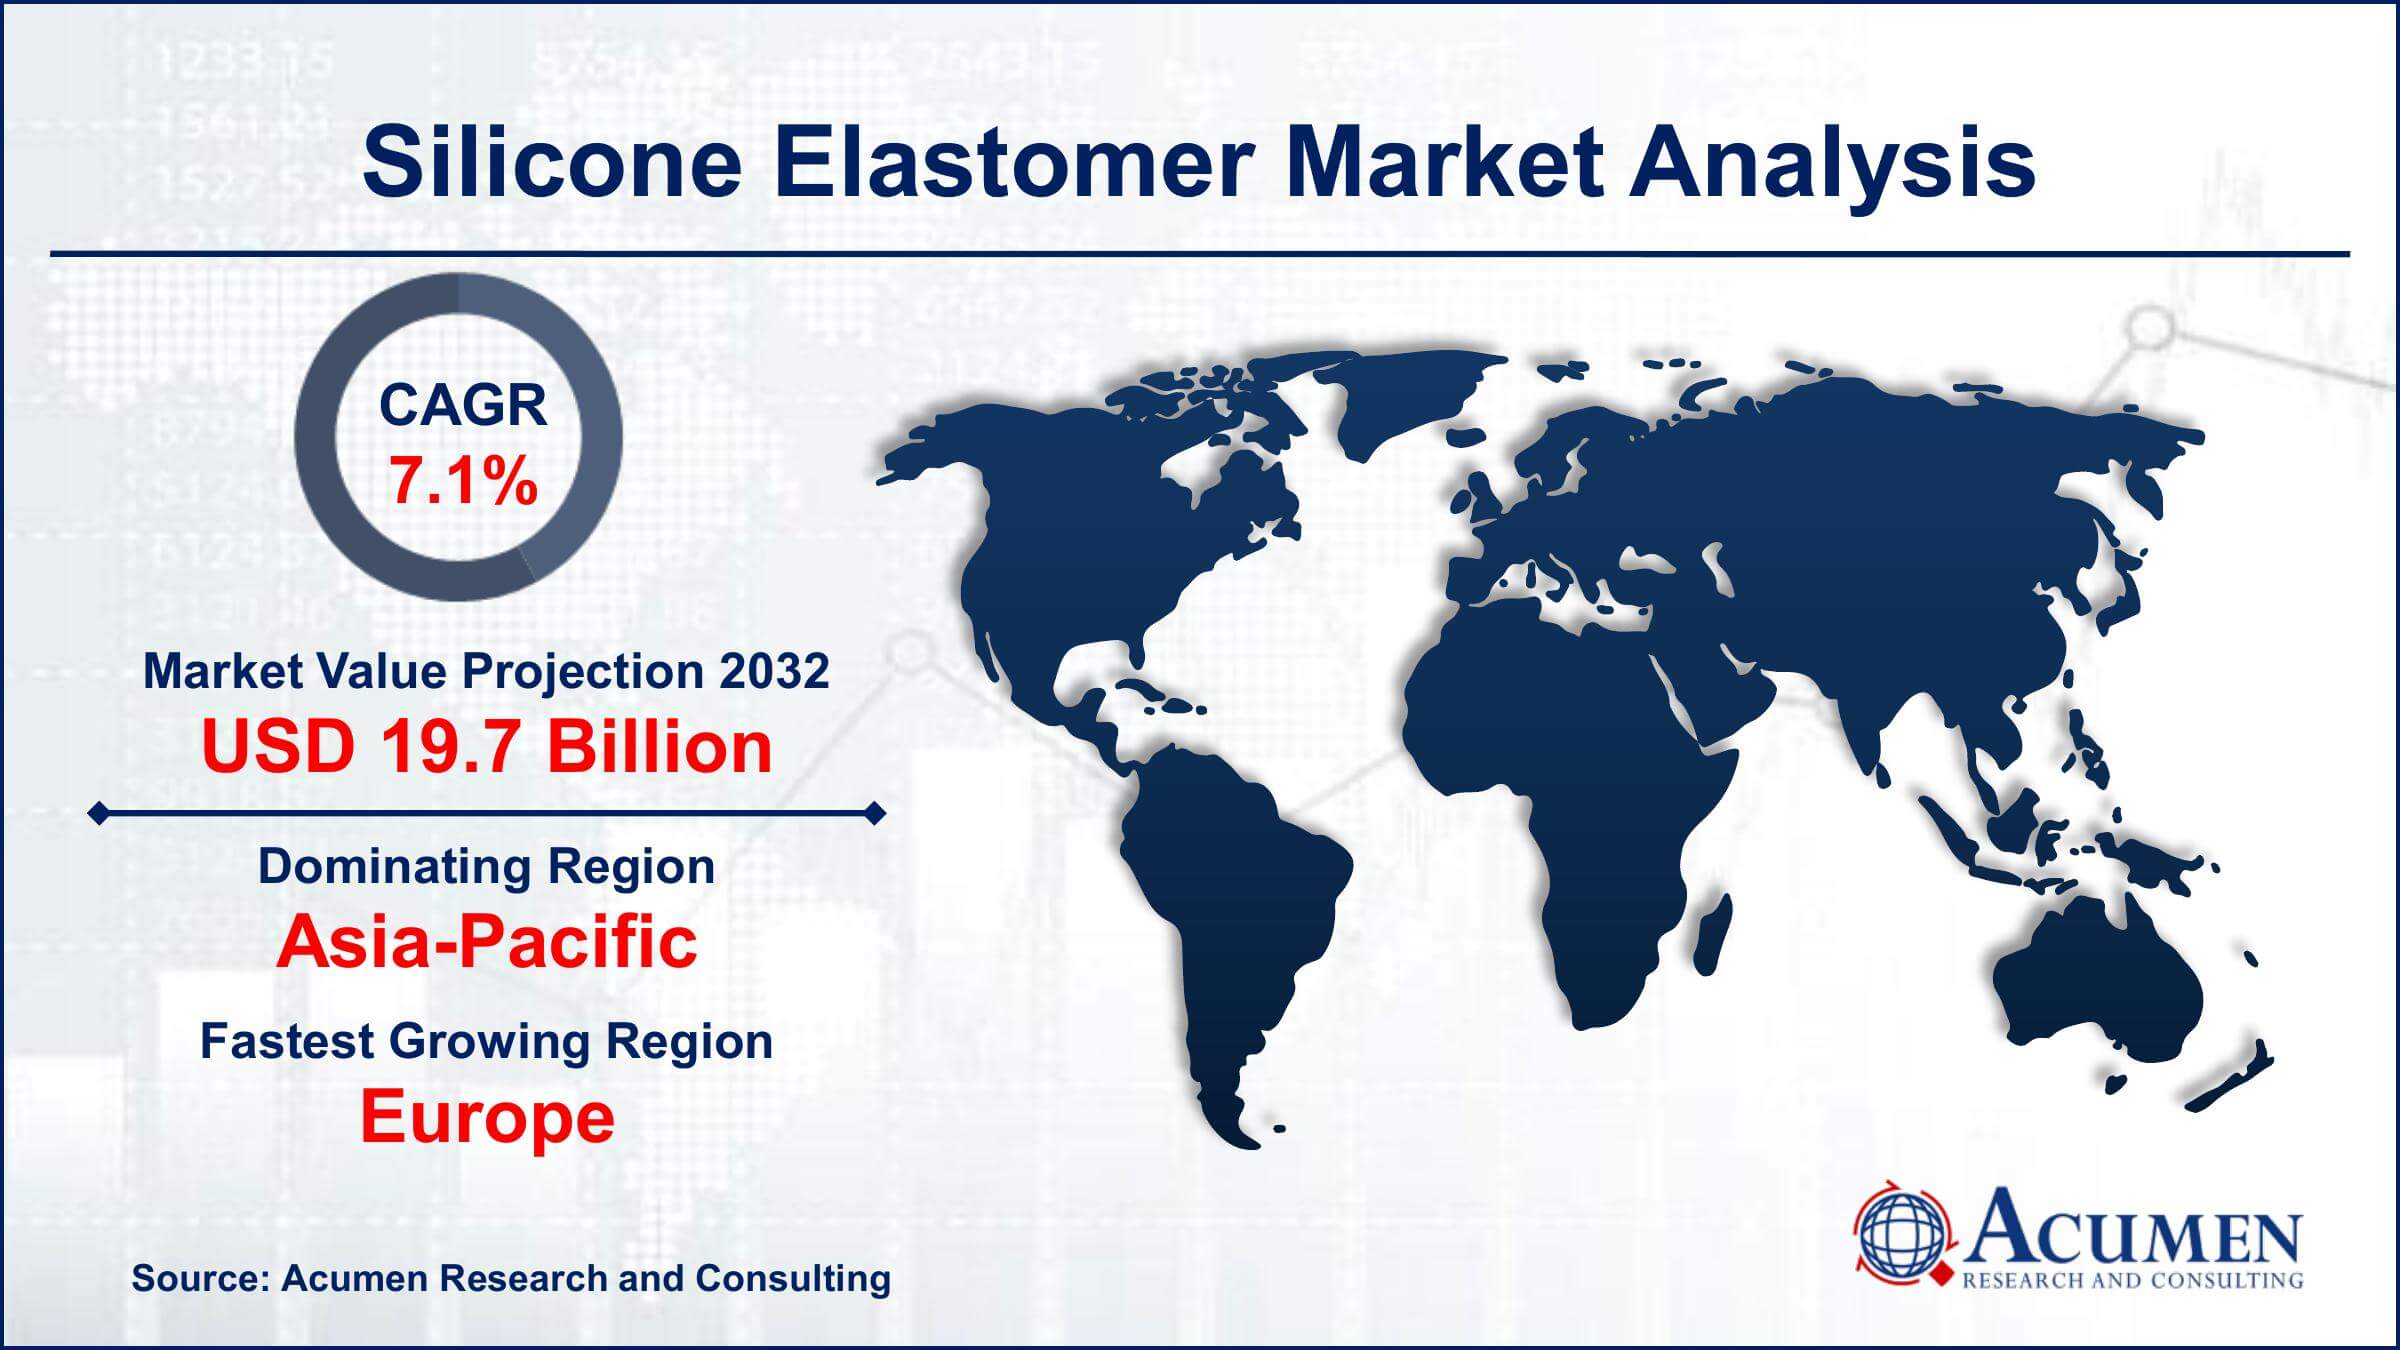 Global Silicone Elastomer Market Trends